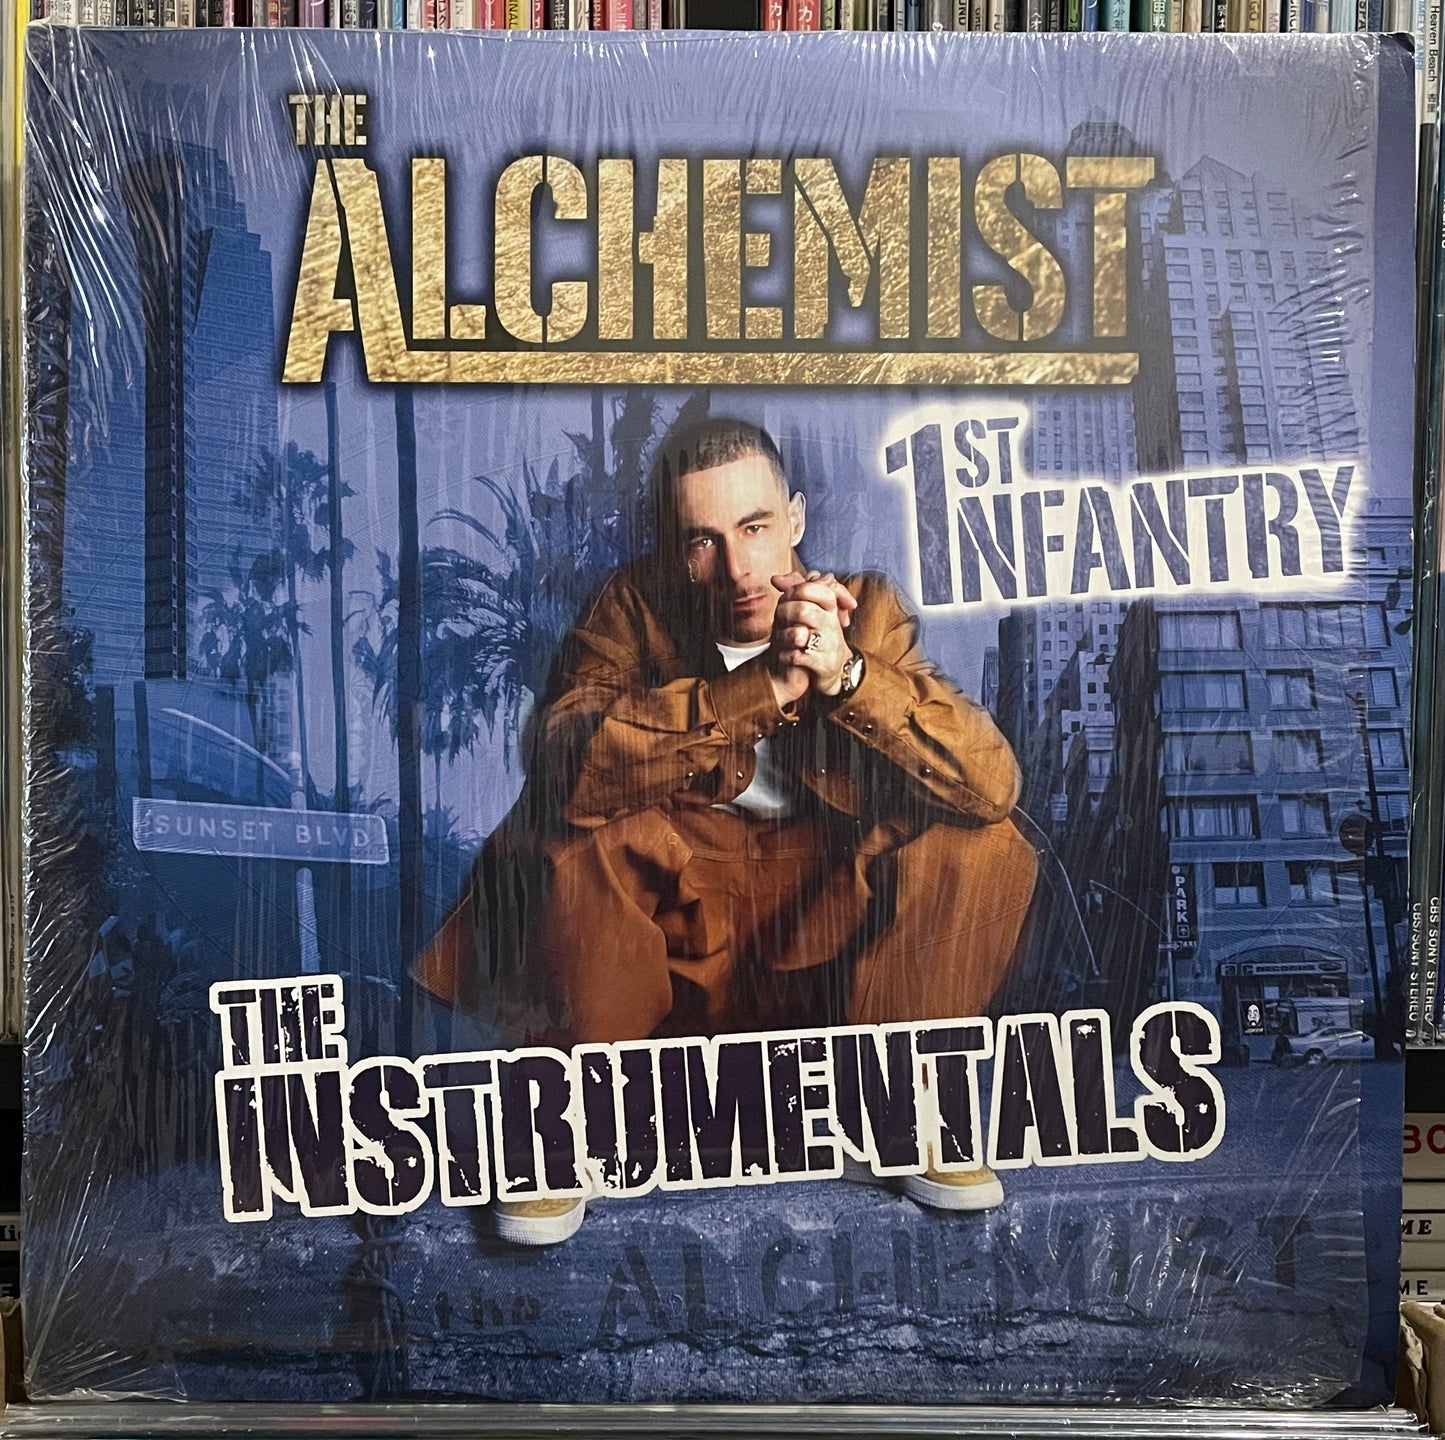 The Alchemist "1st Infantry" - The Instrumentals (2005)